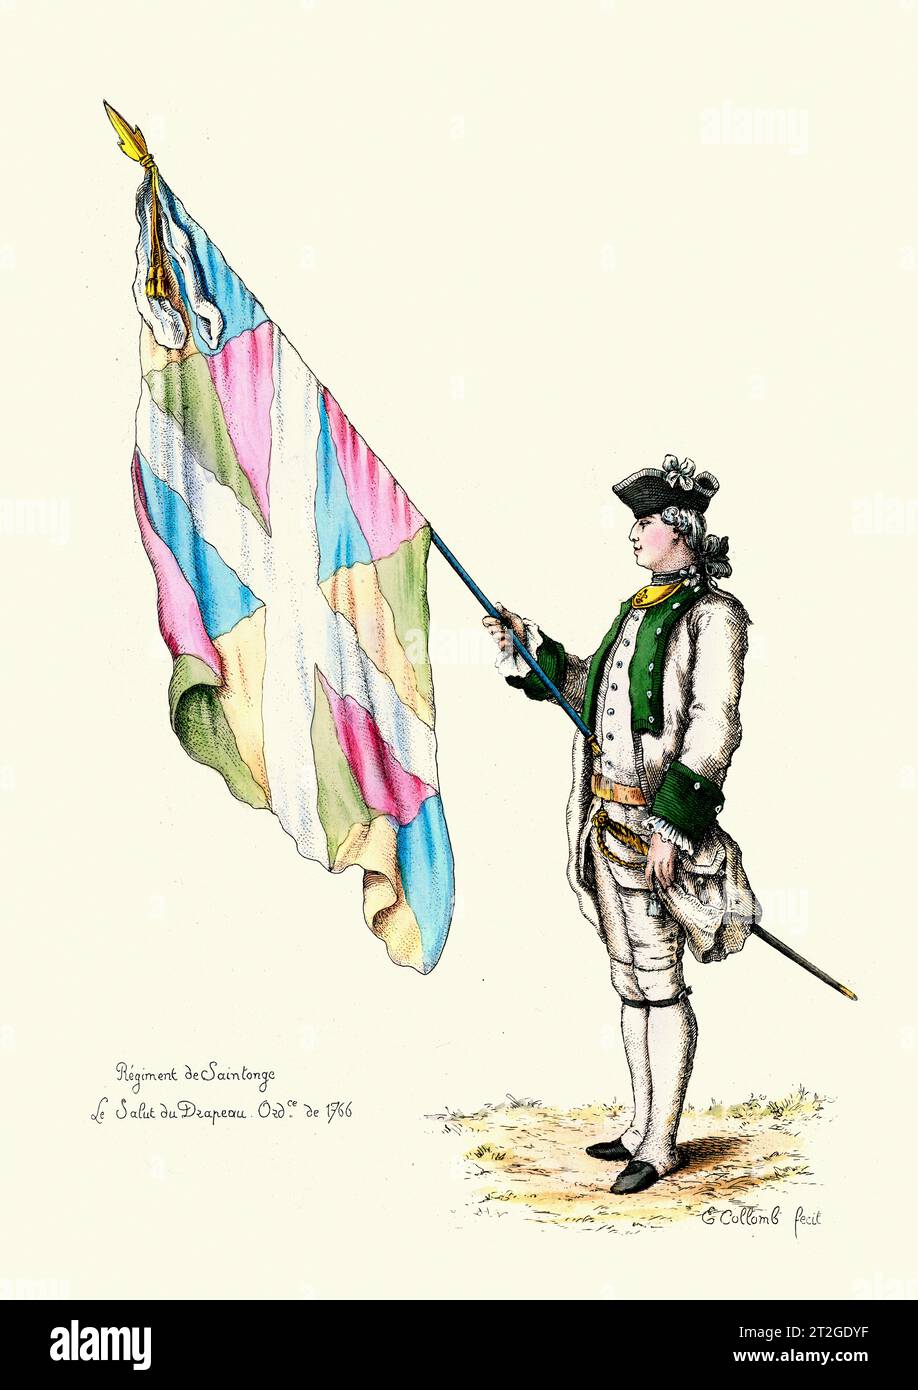 French Military Uniforms, 18th Century, History, Infantry solider standard bearer holding flag, Regiment de Saintonge Stock Photo